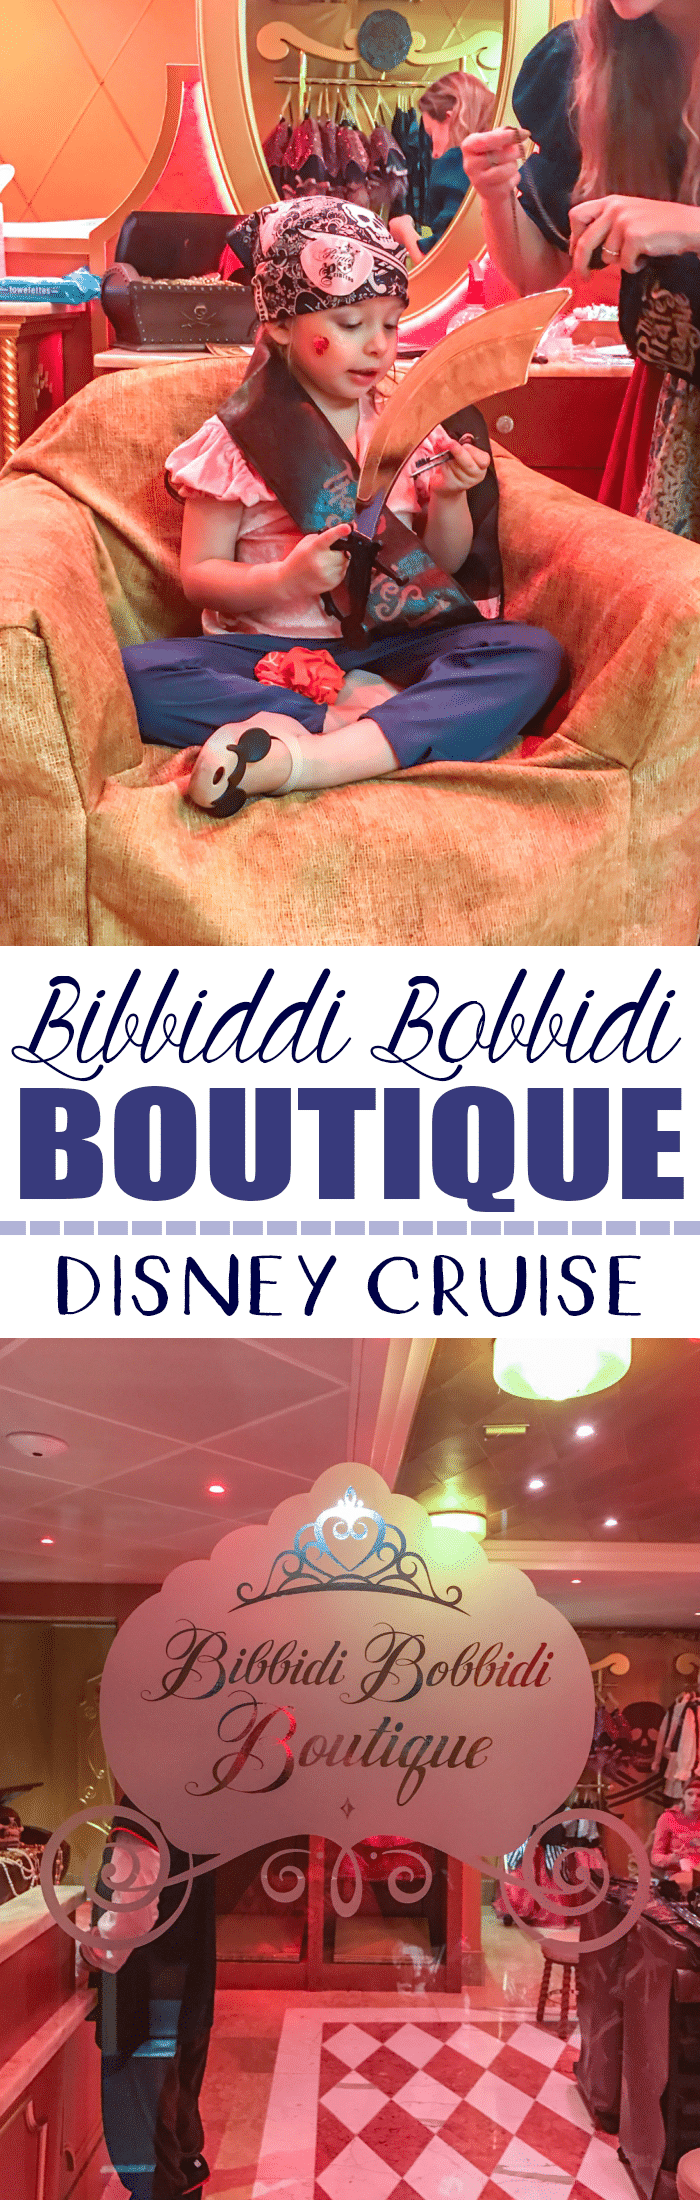 Make Your Disney Cruise Extra Special with Bibbidi Bobbidi Boutique for Disney Princess Anna and Pirate Night